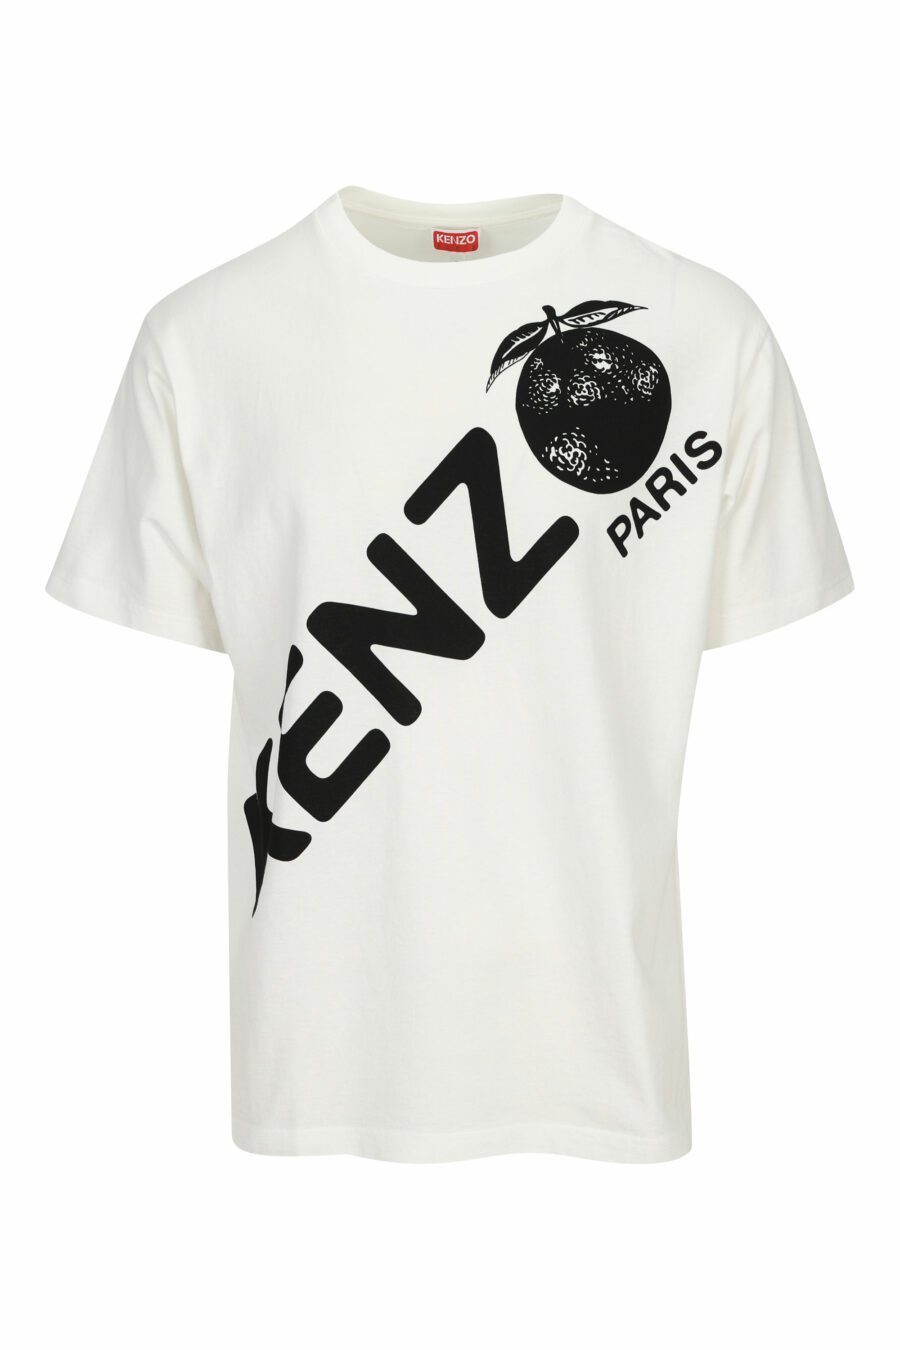 T-shirt branca com maxilogo diagonal "kenzo orange" - 3612230627000